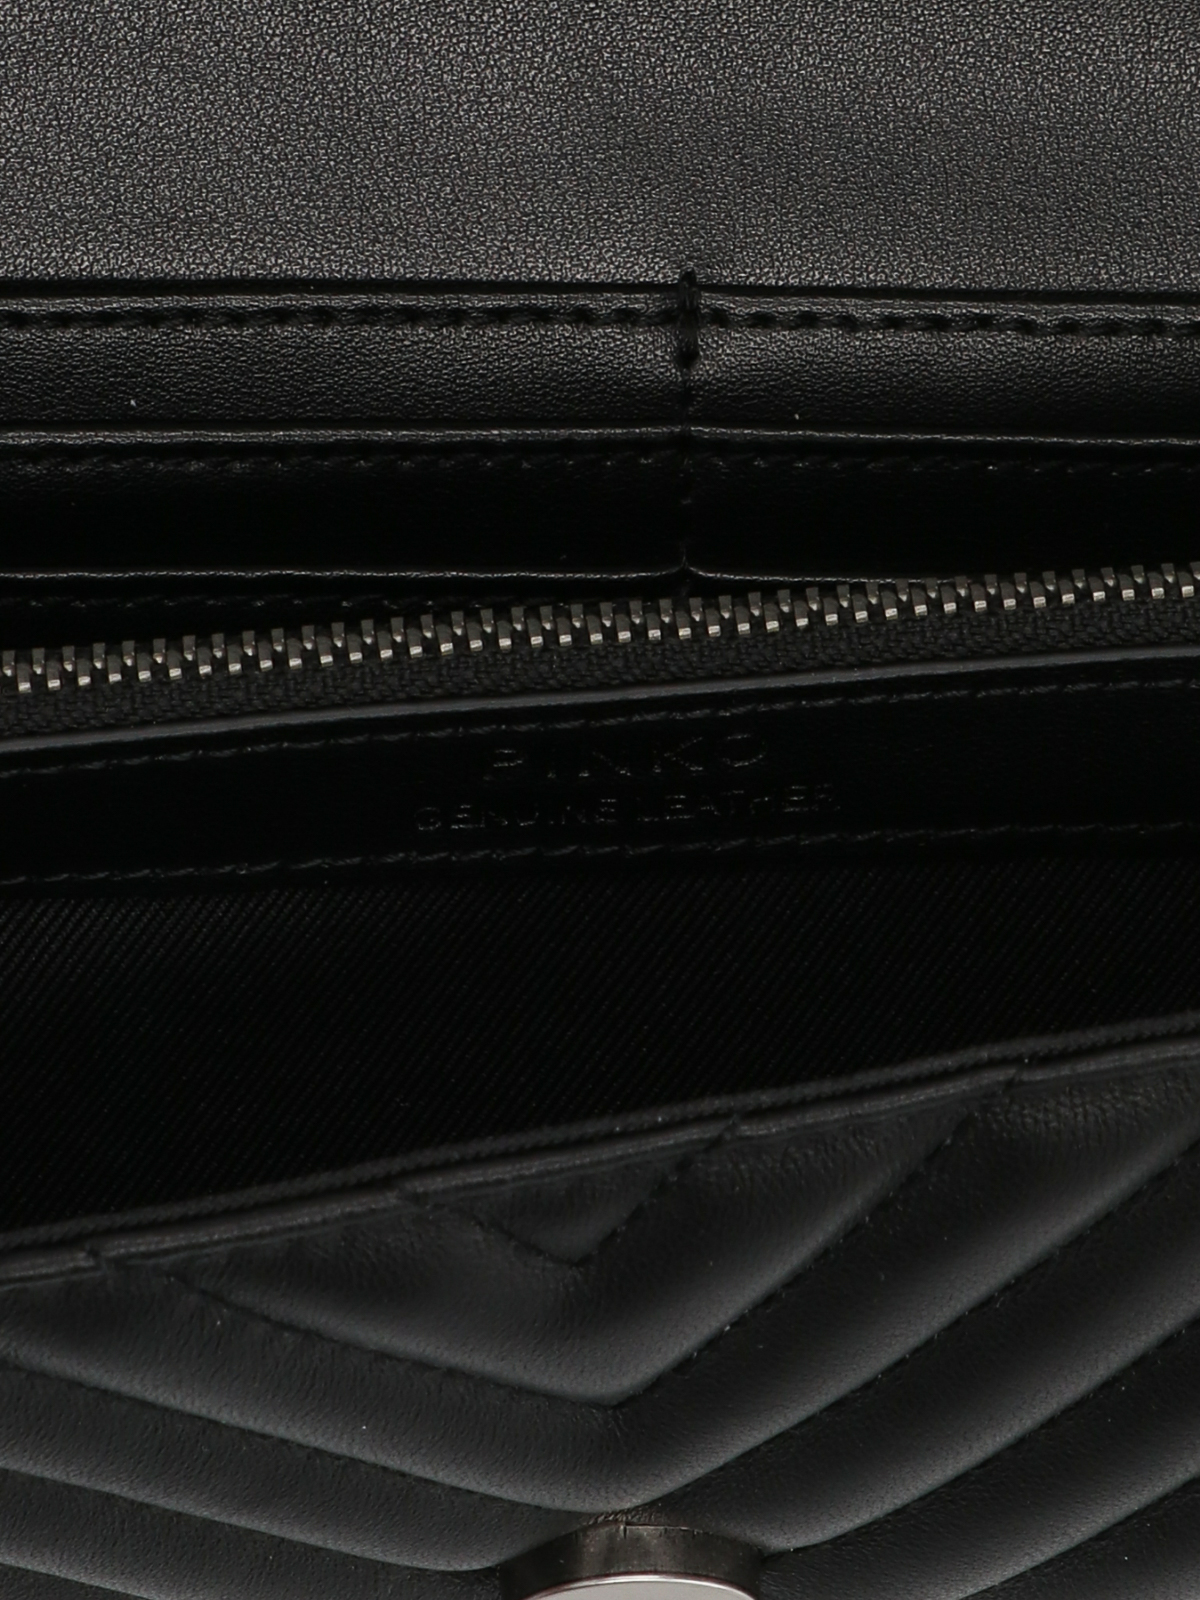 Shop Pinko Love One Wallet Bag In Black